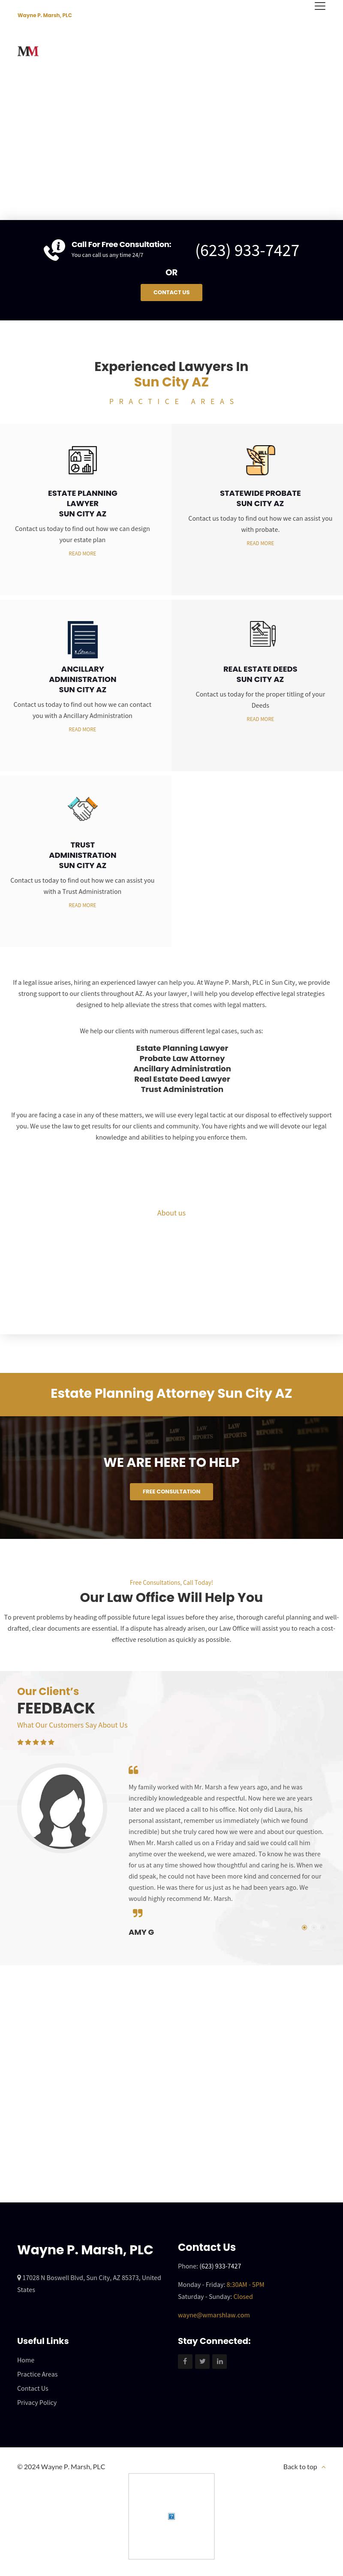 Wayne P. Marsh, P.C. - Sun City AZ Lawyers